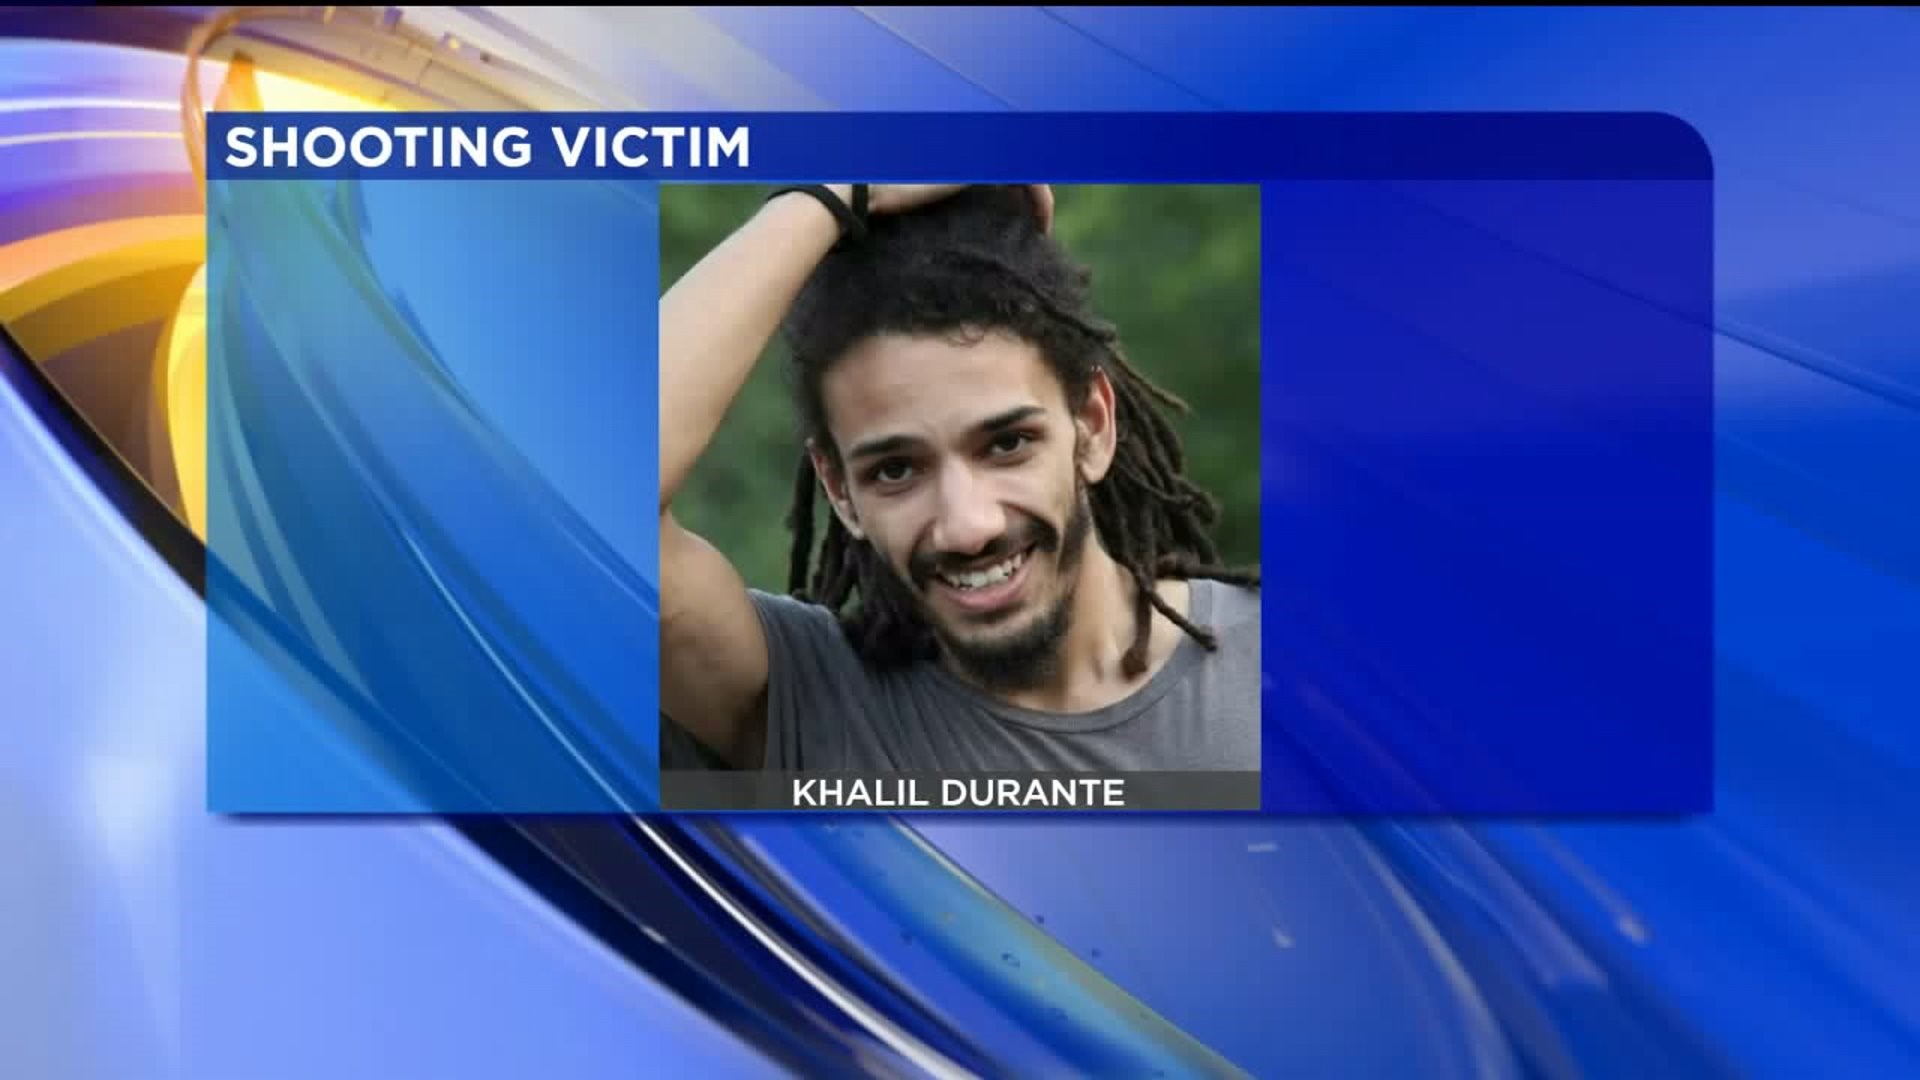 Second Victim Dies Following Shooting